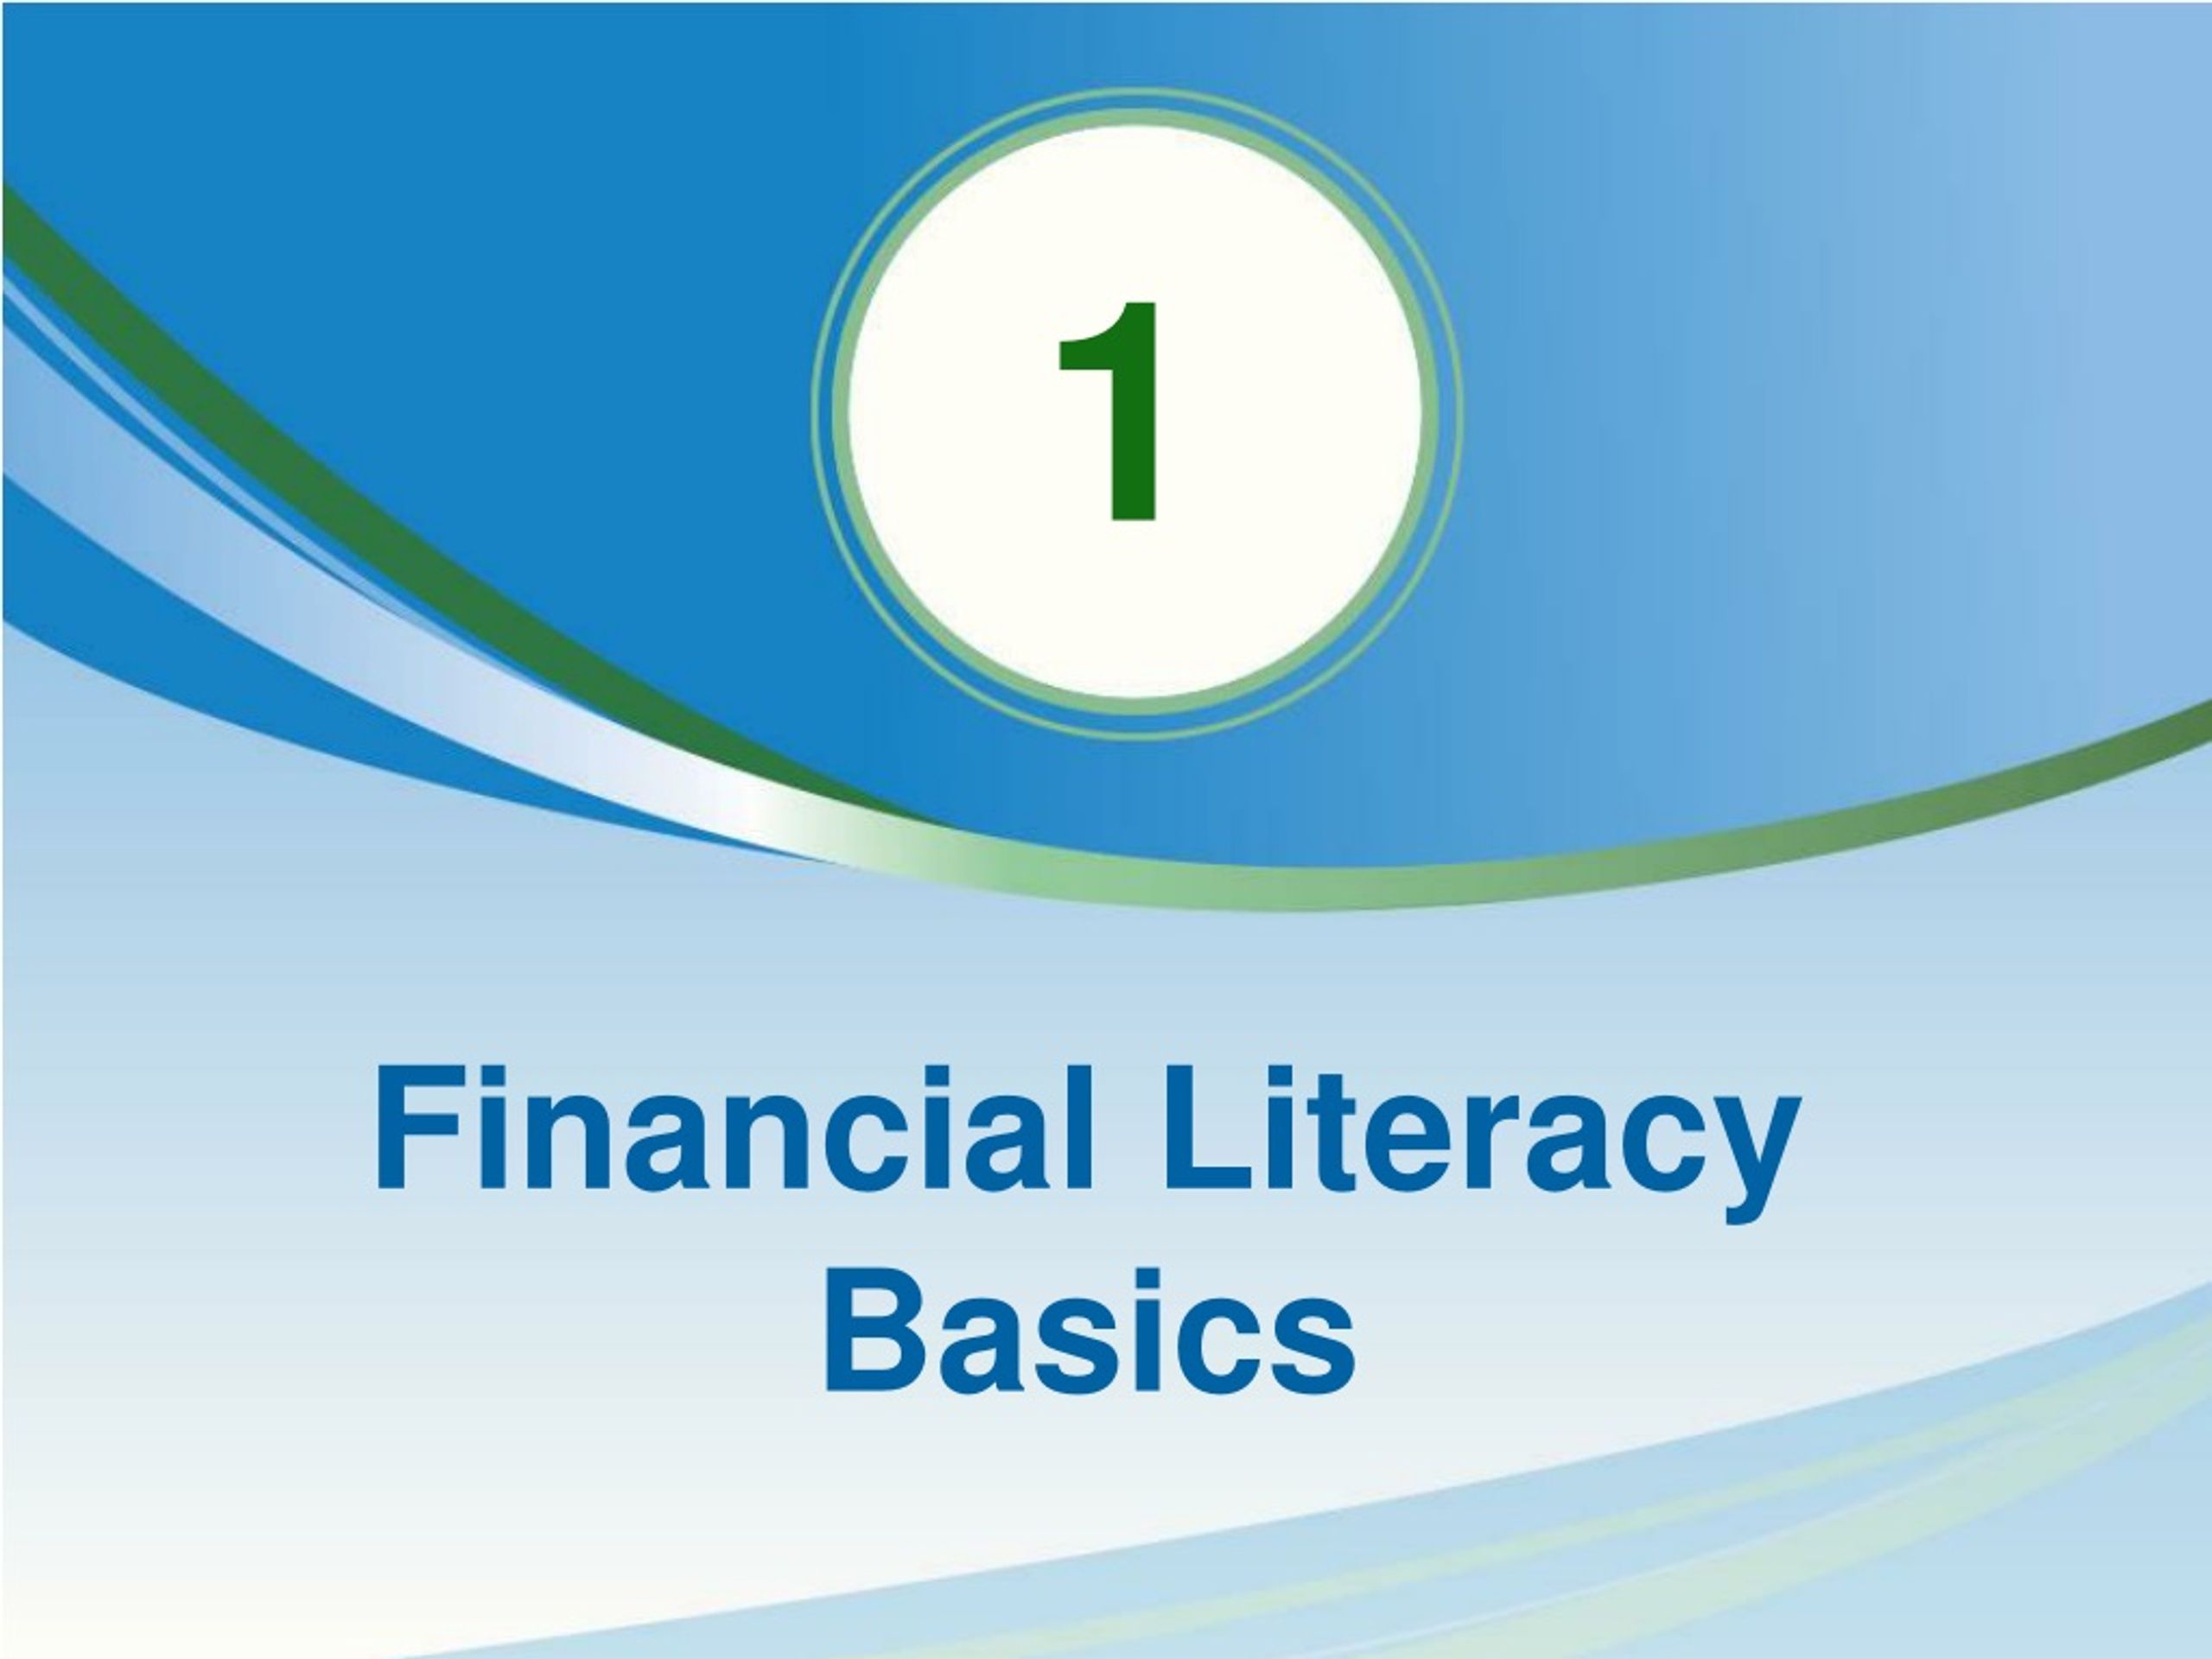 financial literacy presentation